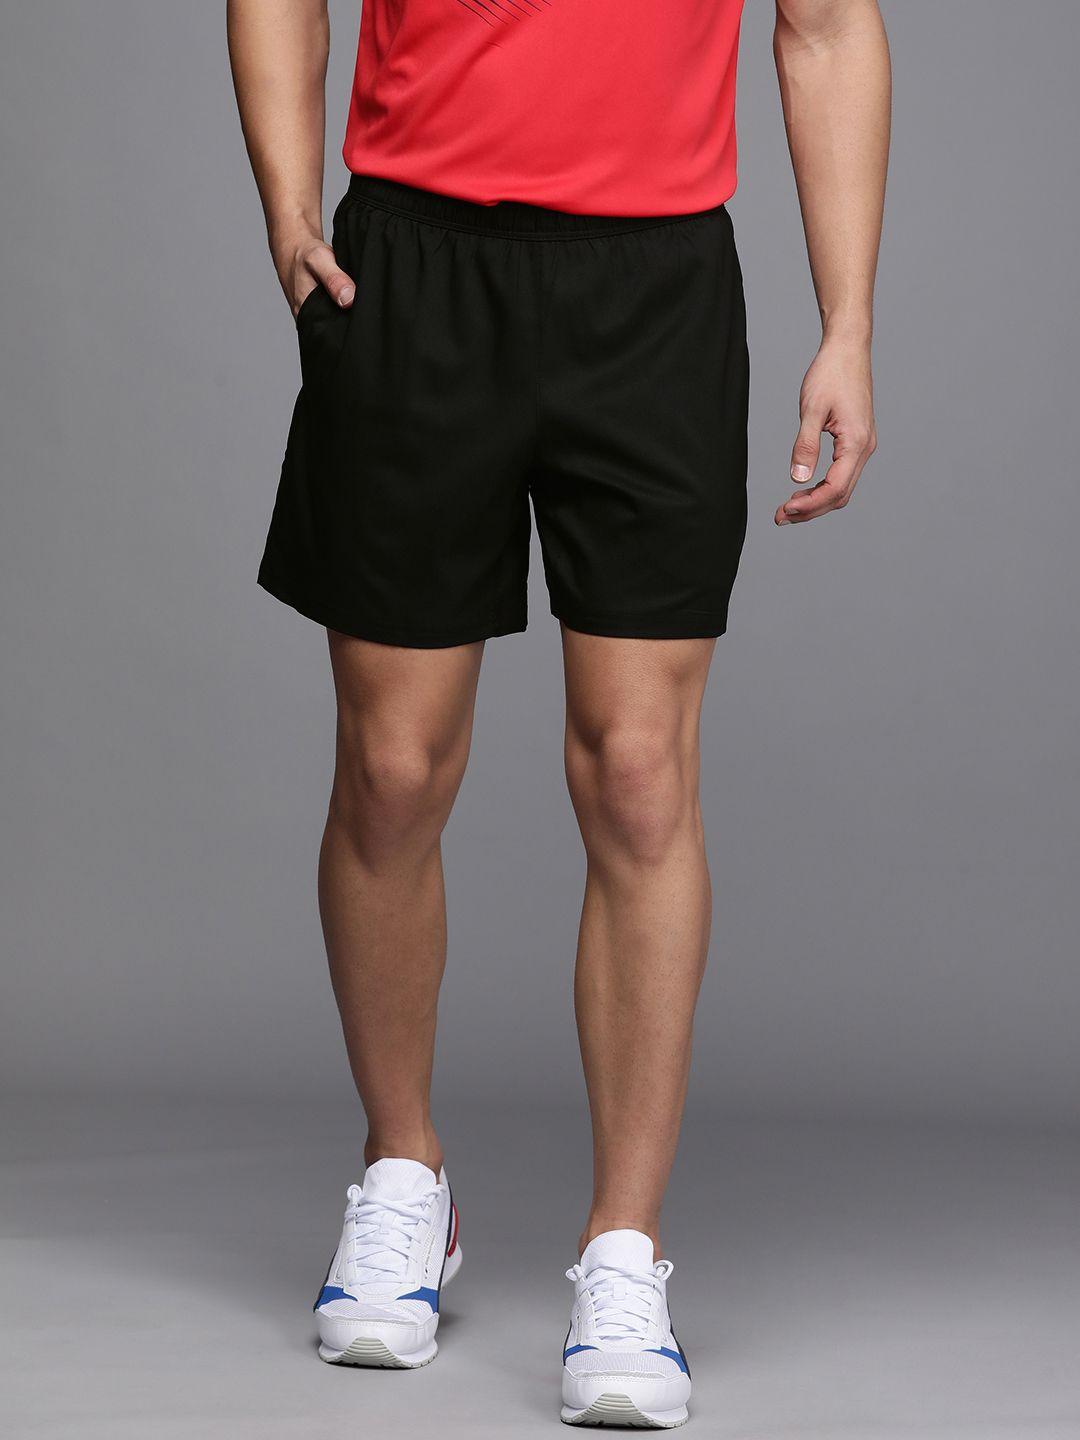 asics men black solid above knee sports running shorts